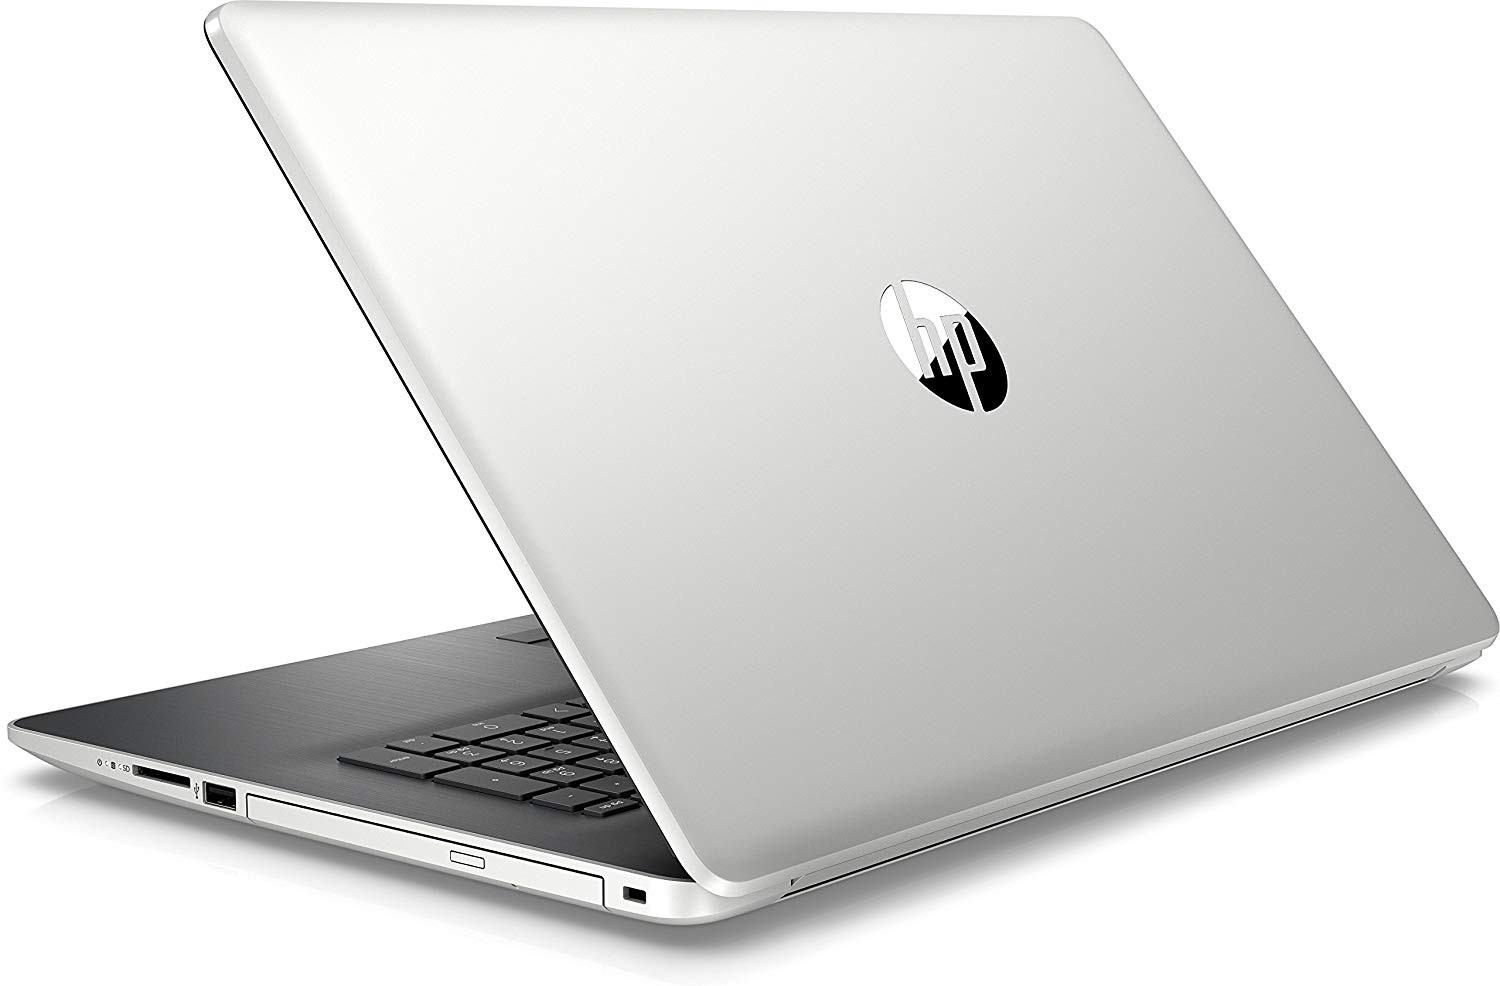 HP 17.3" HD+ Notebook, Intel Core i7-8550U Processor, 2TB Hard Drive, Optical Drive, HD Webcam, HD Audio, Windows 10 Home (Natural Silver)